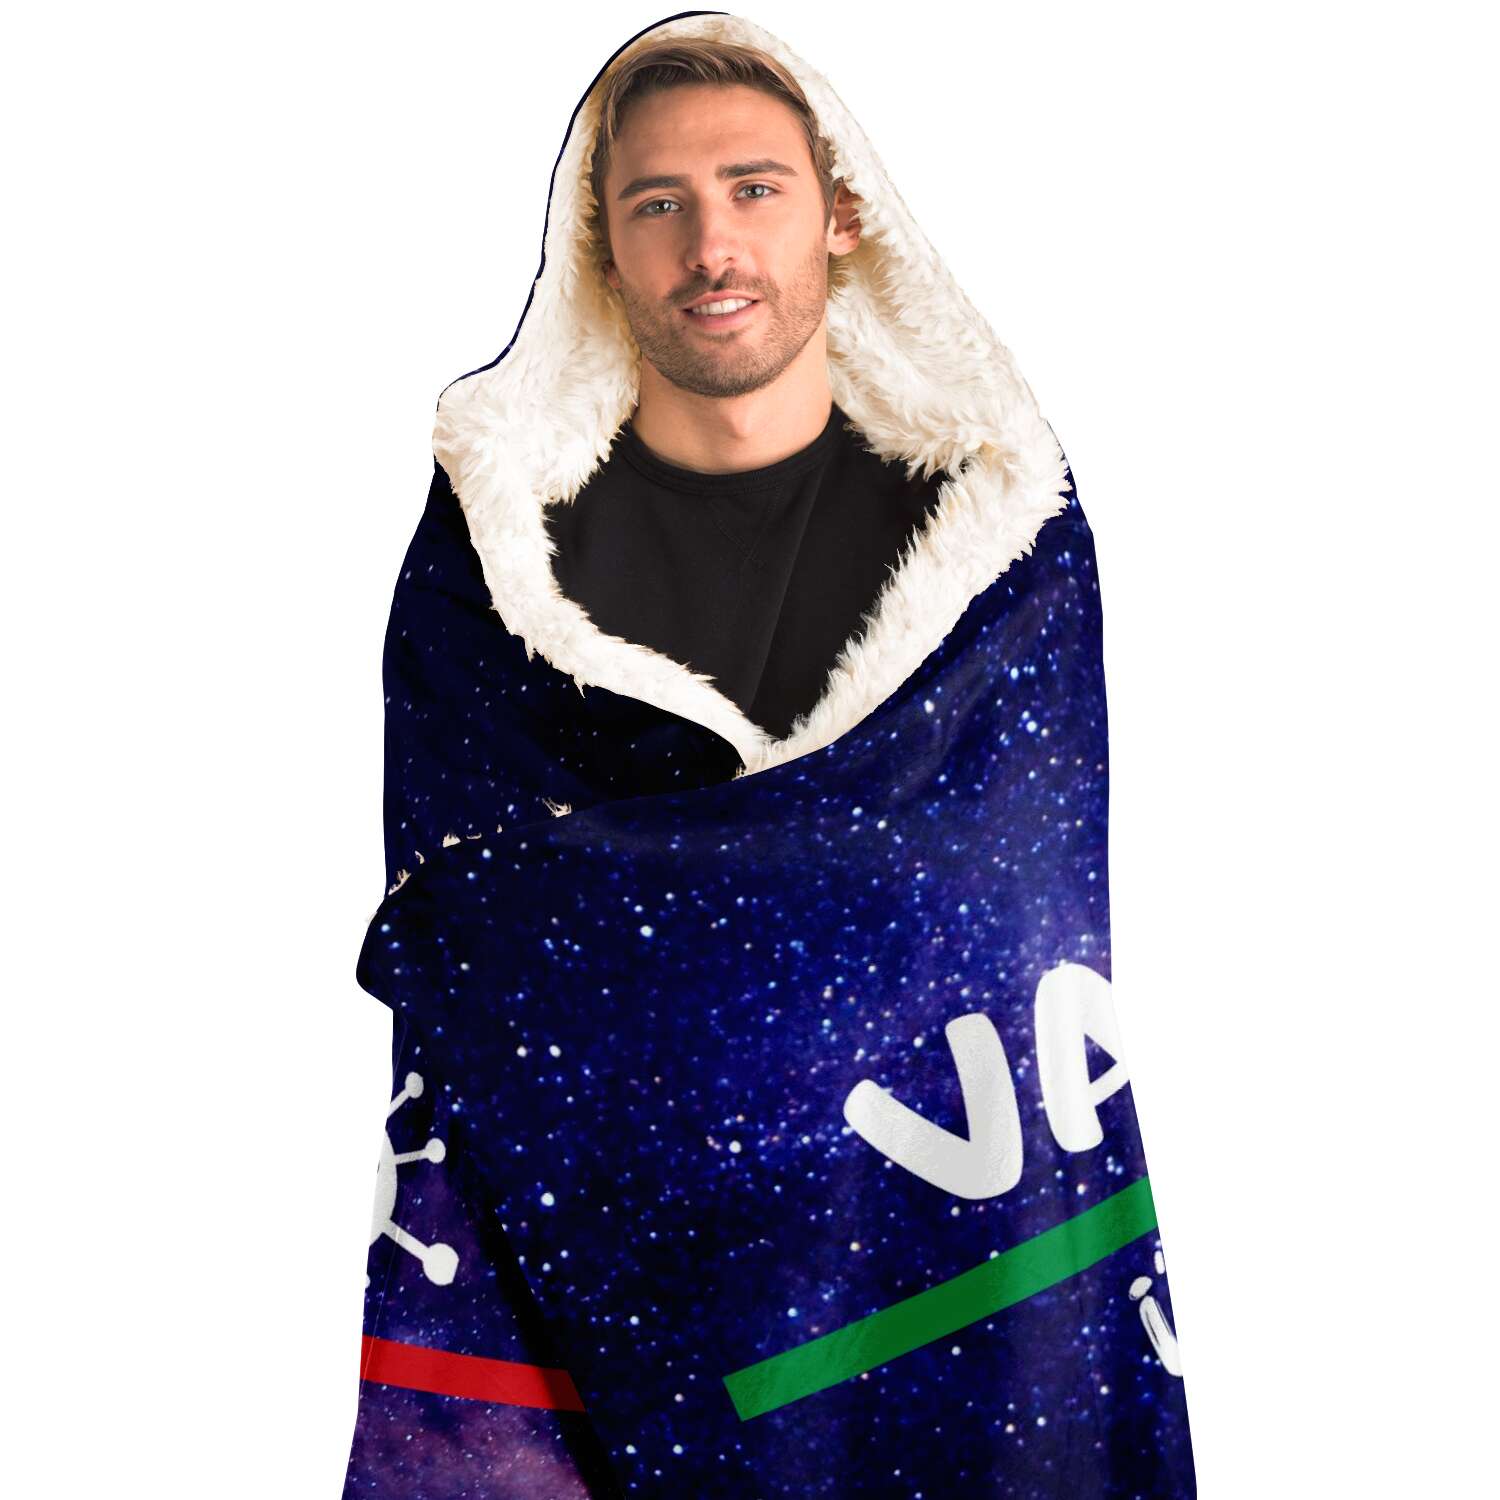 Vaffanculo "Social Distancing" Galaxy Hooded Blanket